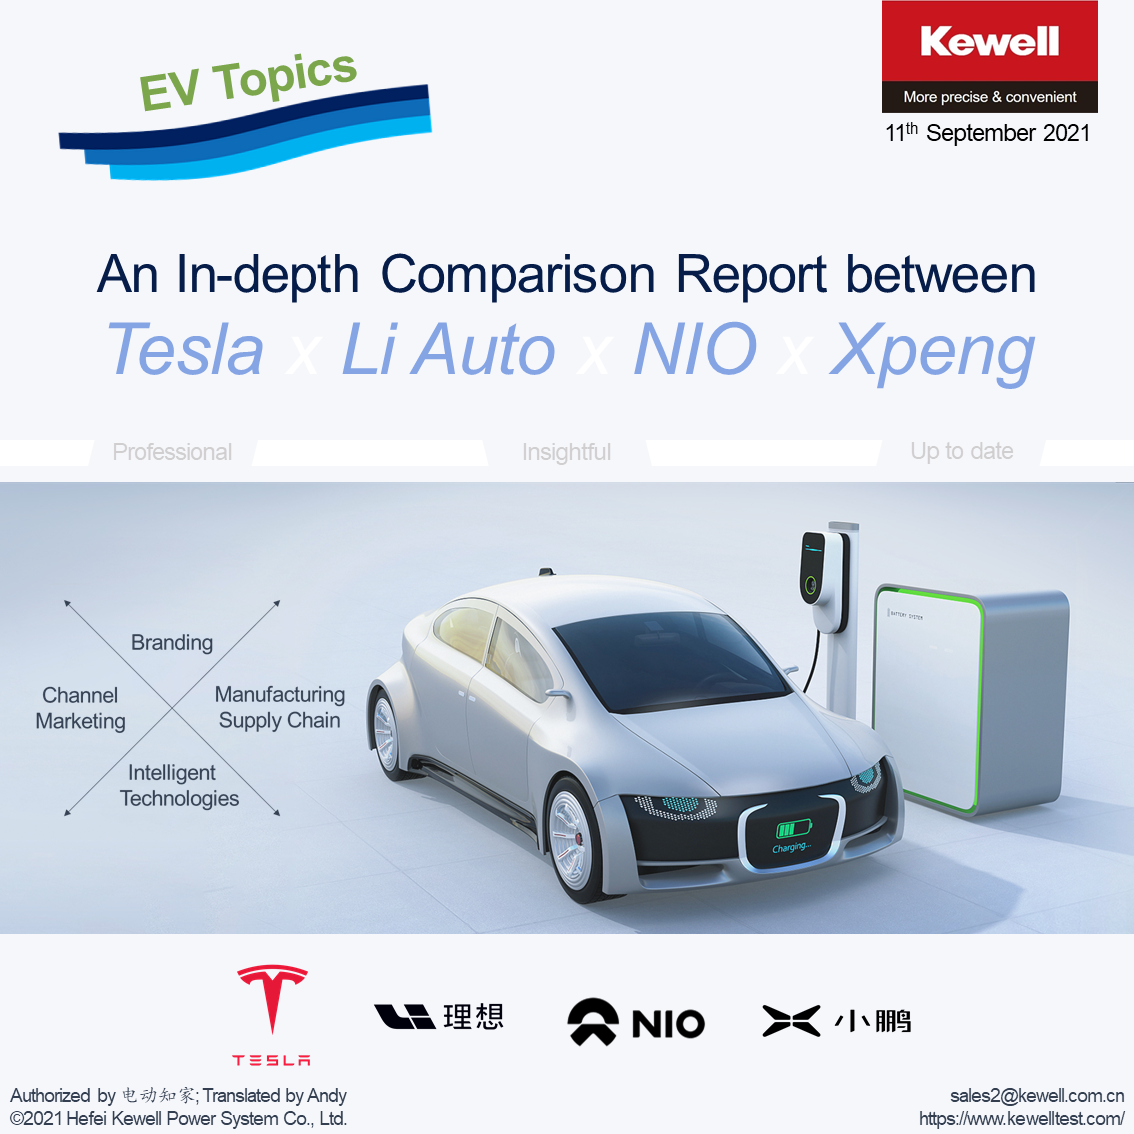 EV Topics: An In-depth Comparison Report between the Top 4 OEMs (Tesla, Li Auto, NIO, Xpeng)